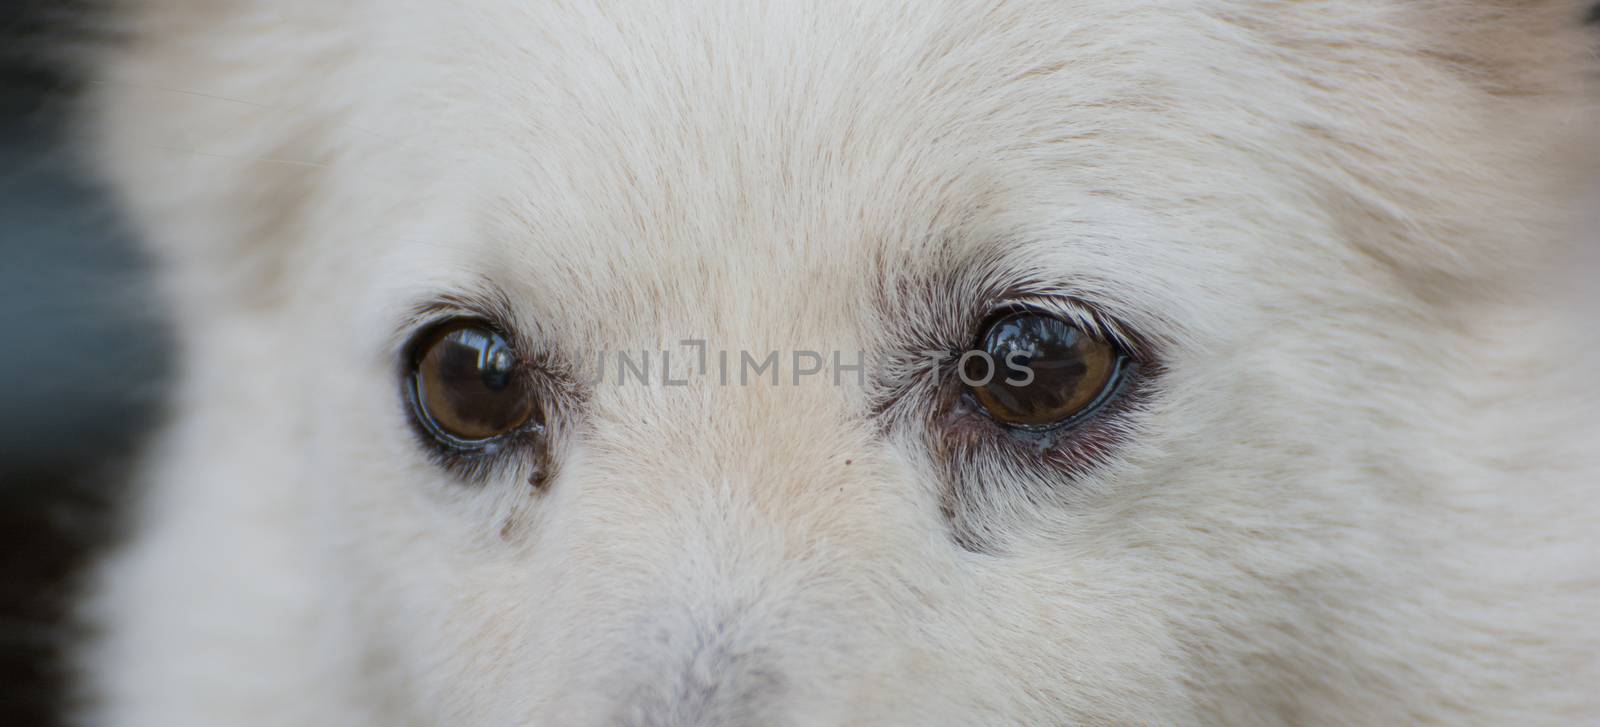 Eye cute shih tzu breed dog by Sorapop